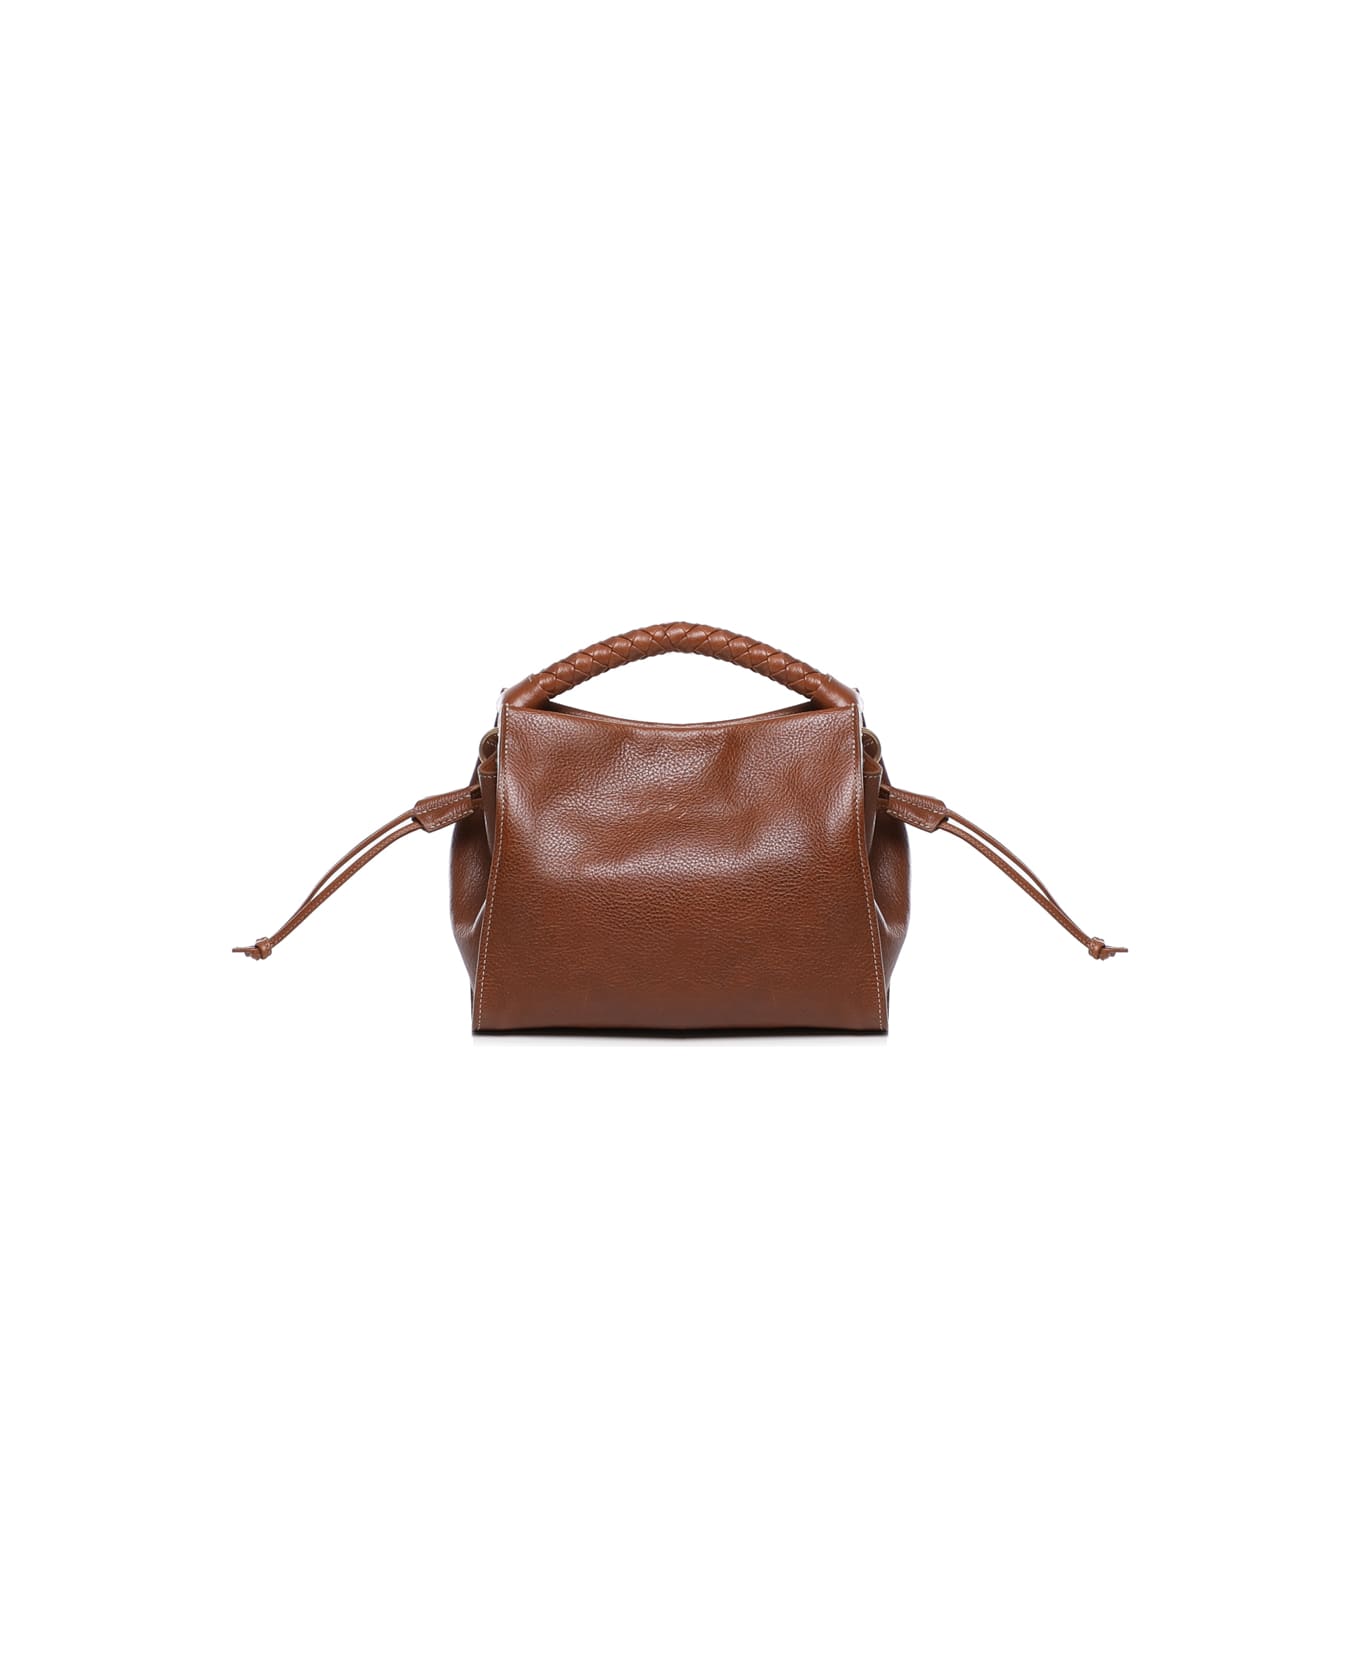 Mulberry Handbag In Cowskin - Brown